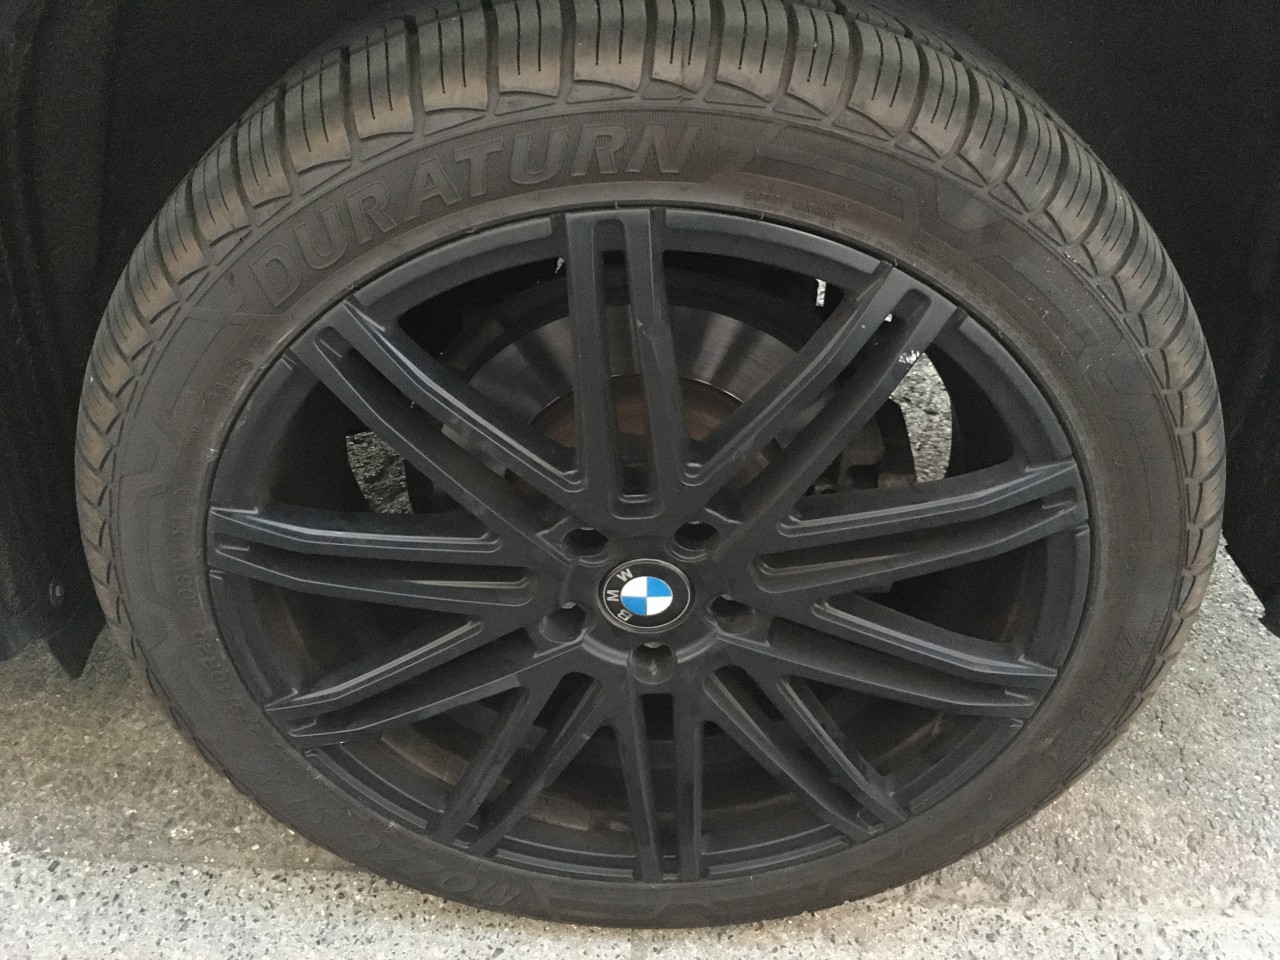 inconfort : tremblements - MA-BMW.com